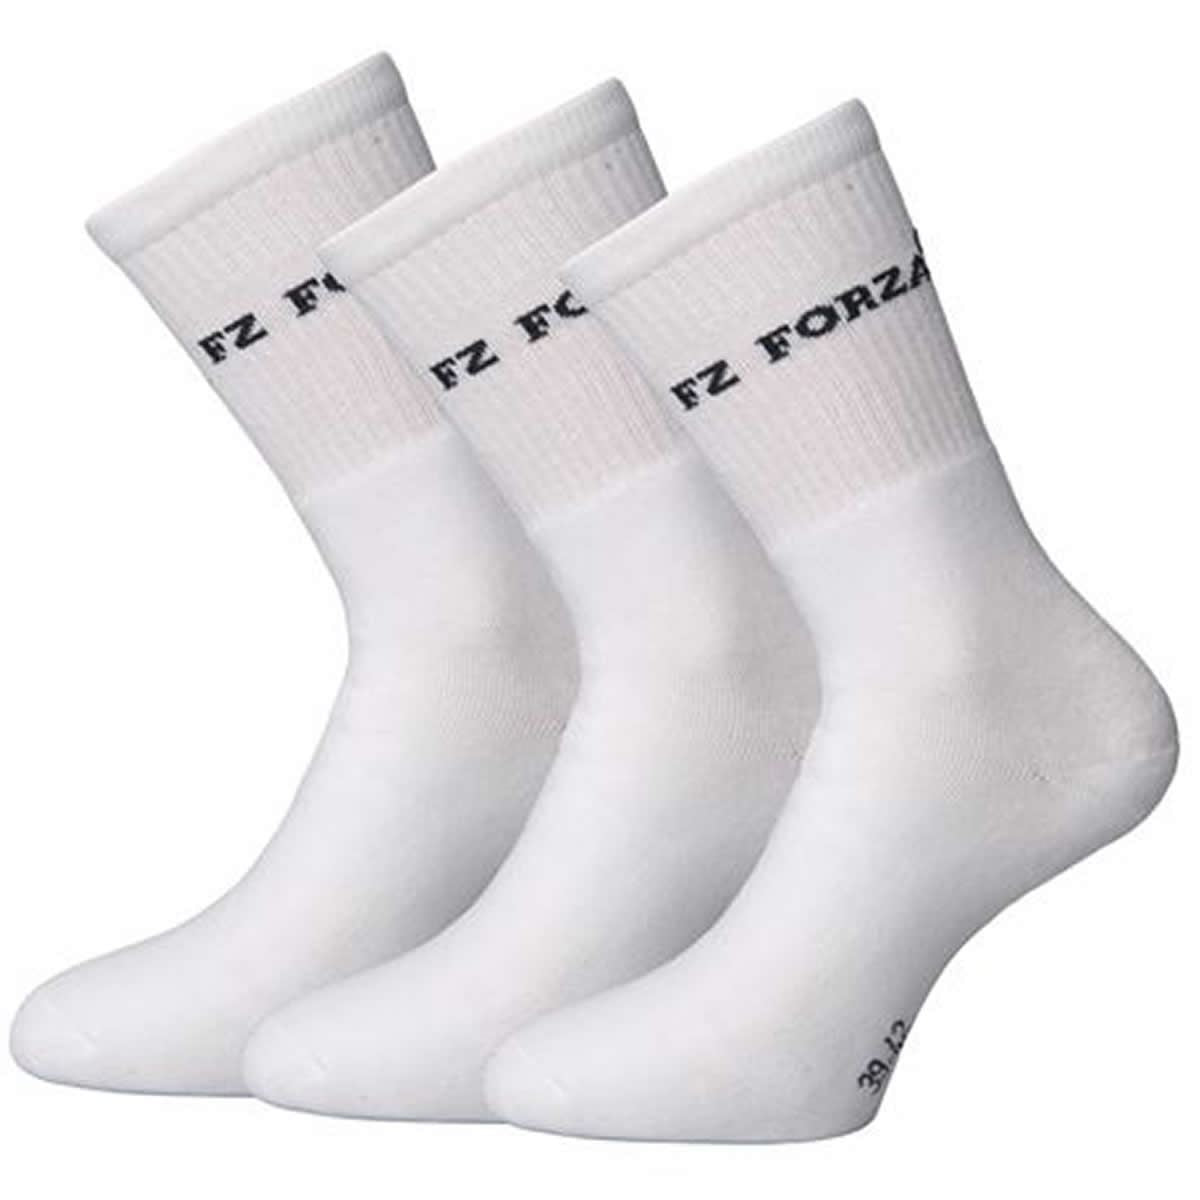 FZ Forza Sock Long Classic White Badminton Socks - 3 Pairs